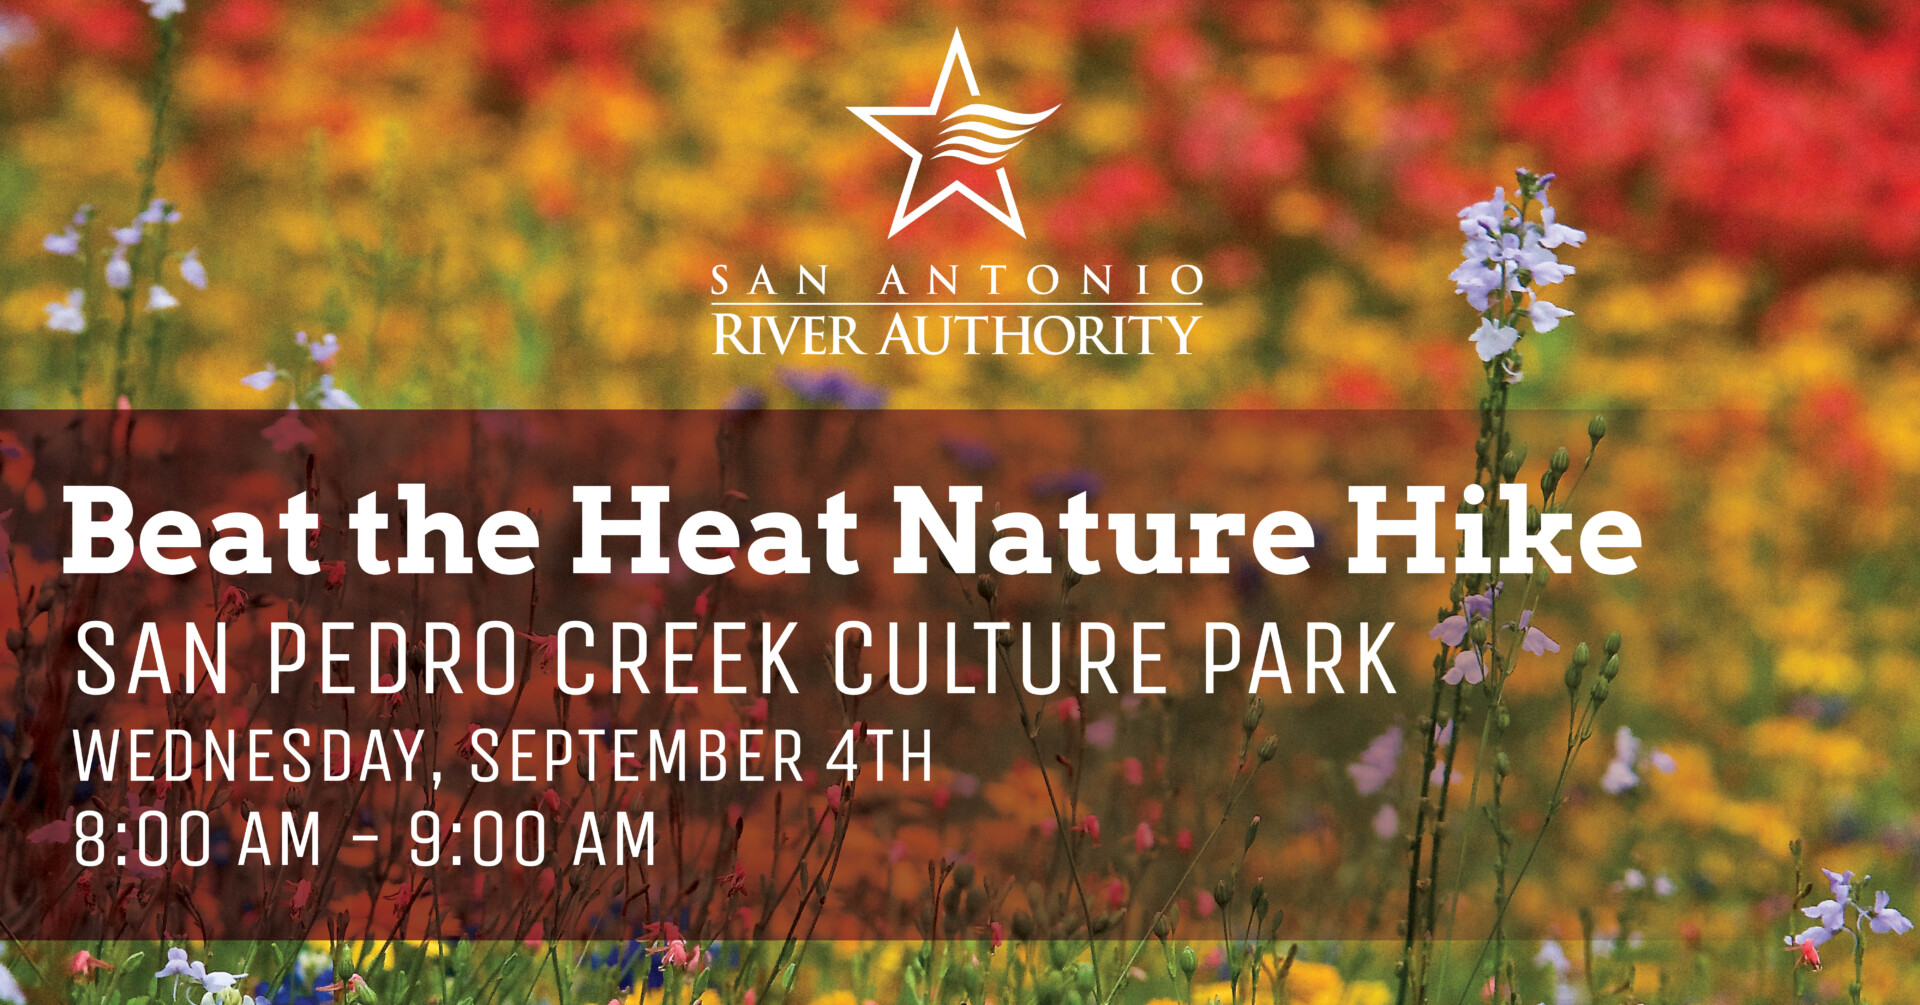 Beat the Heat San Pedro Creek Culture Park